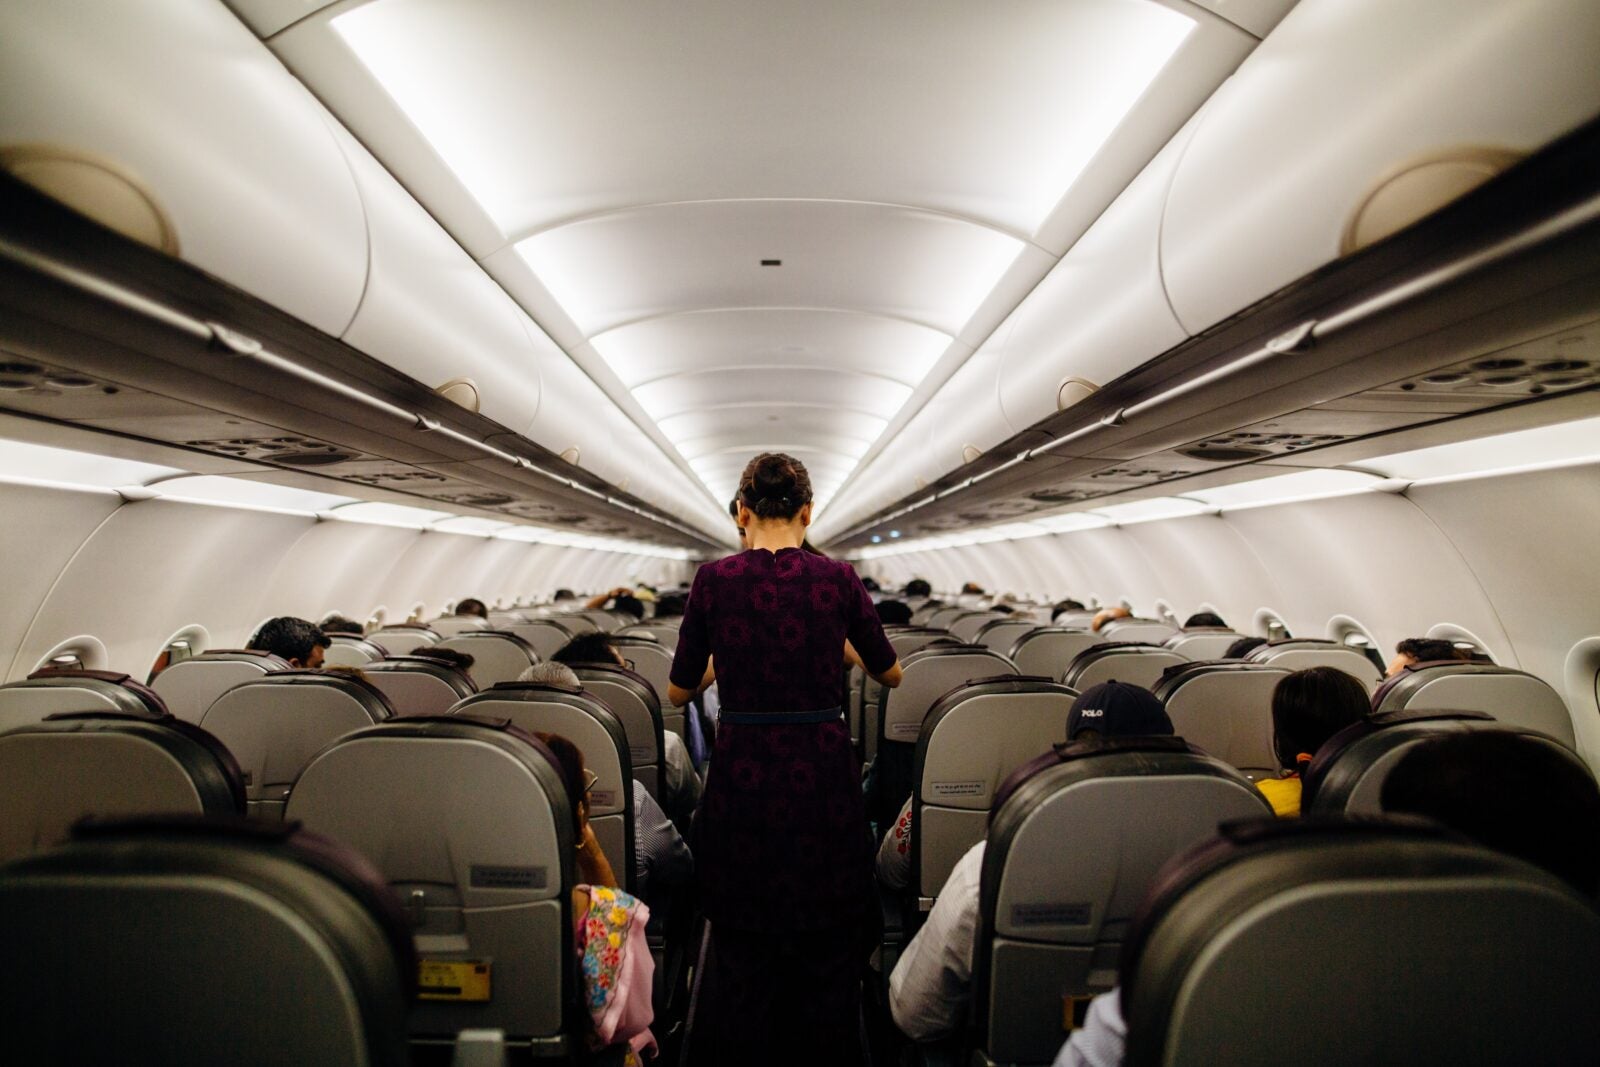 A flight stewardess pushing a trolley through the alley of an airplane